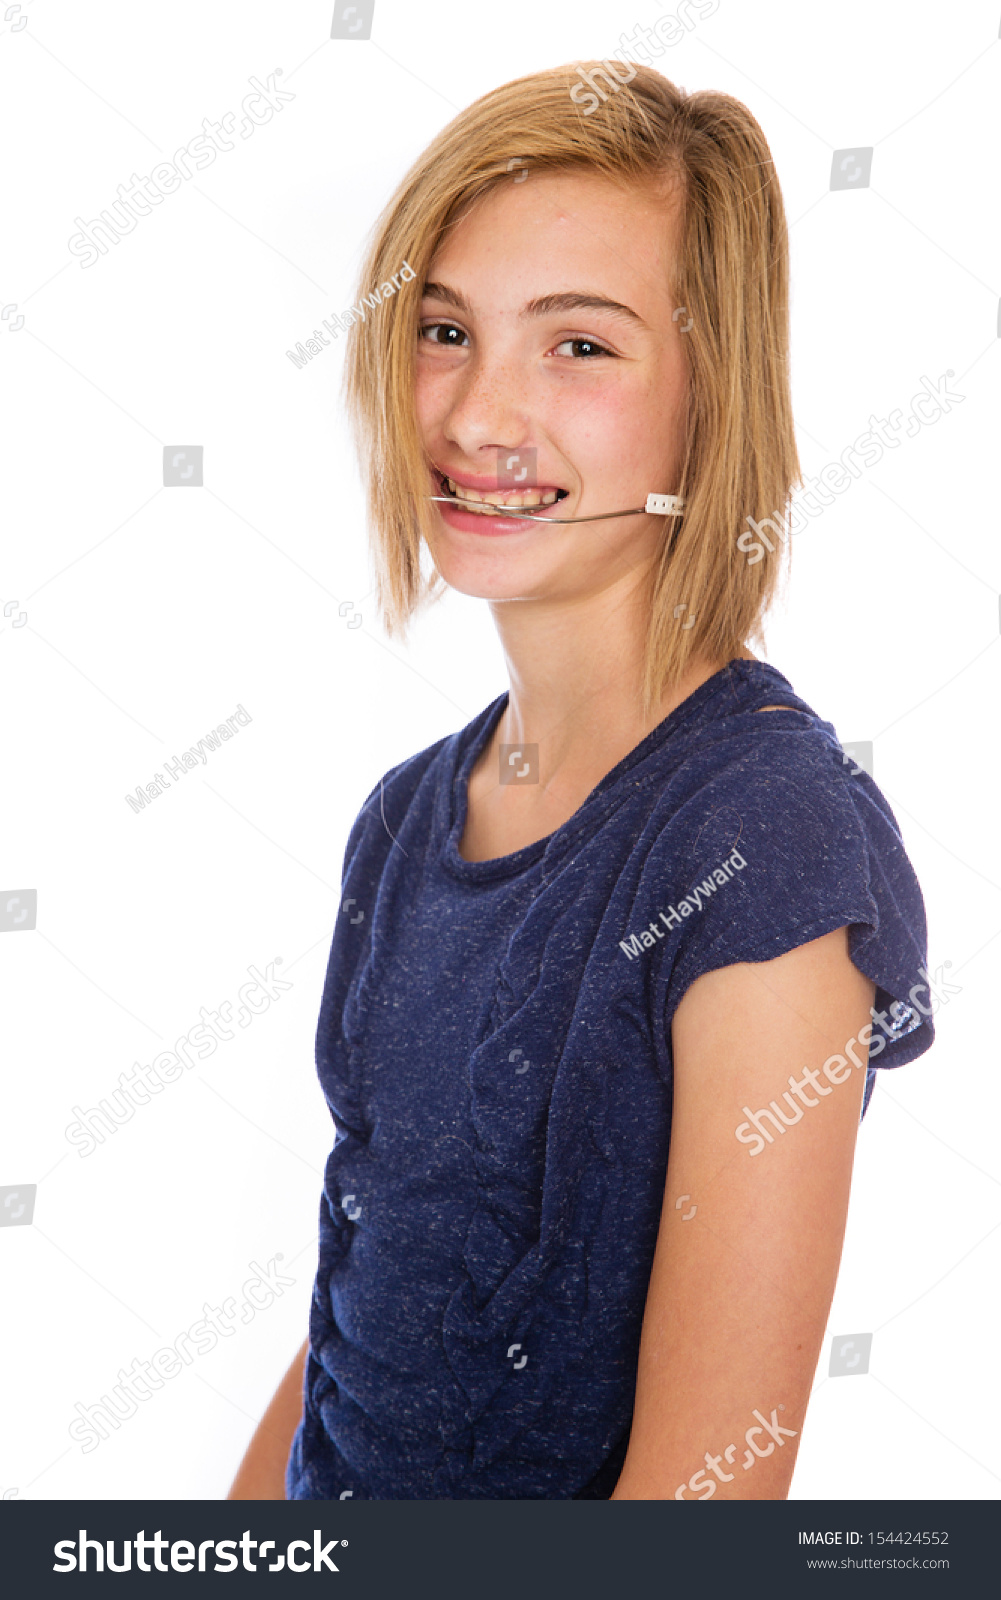 A happy teenage girl wearing corrective headgear for her teeth. #154424552